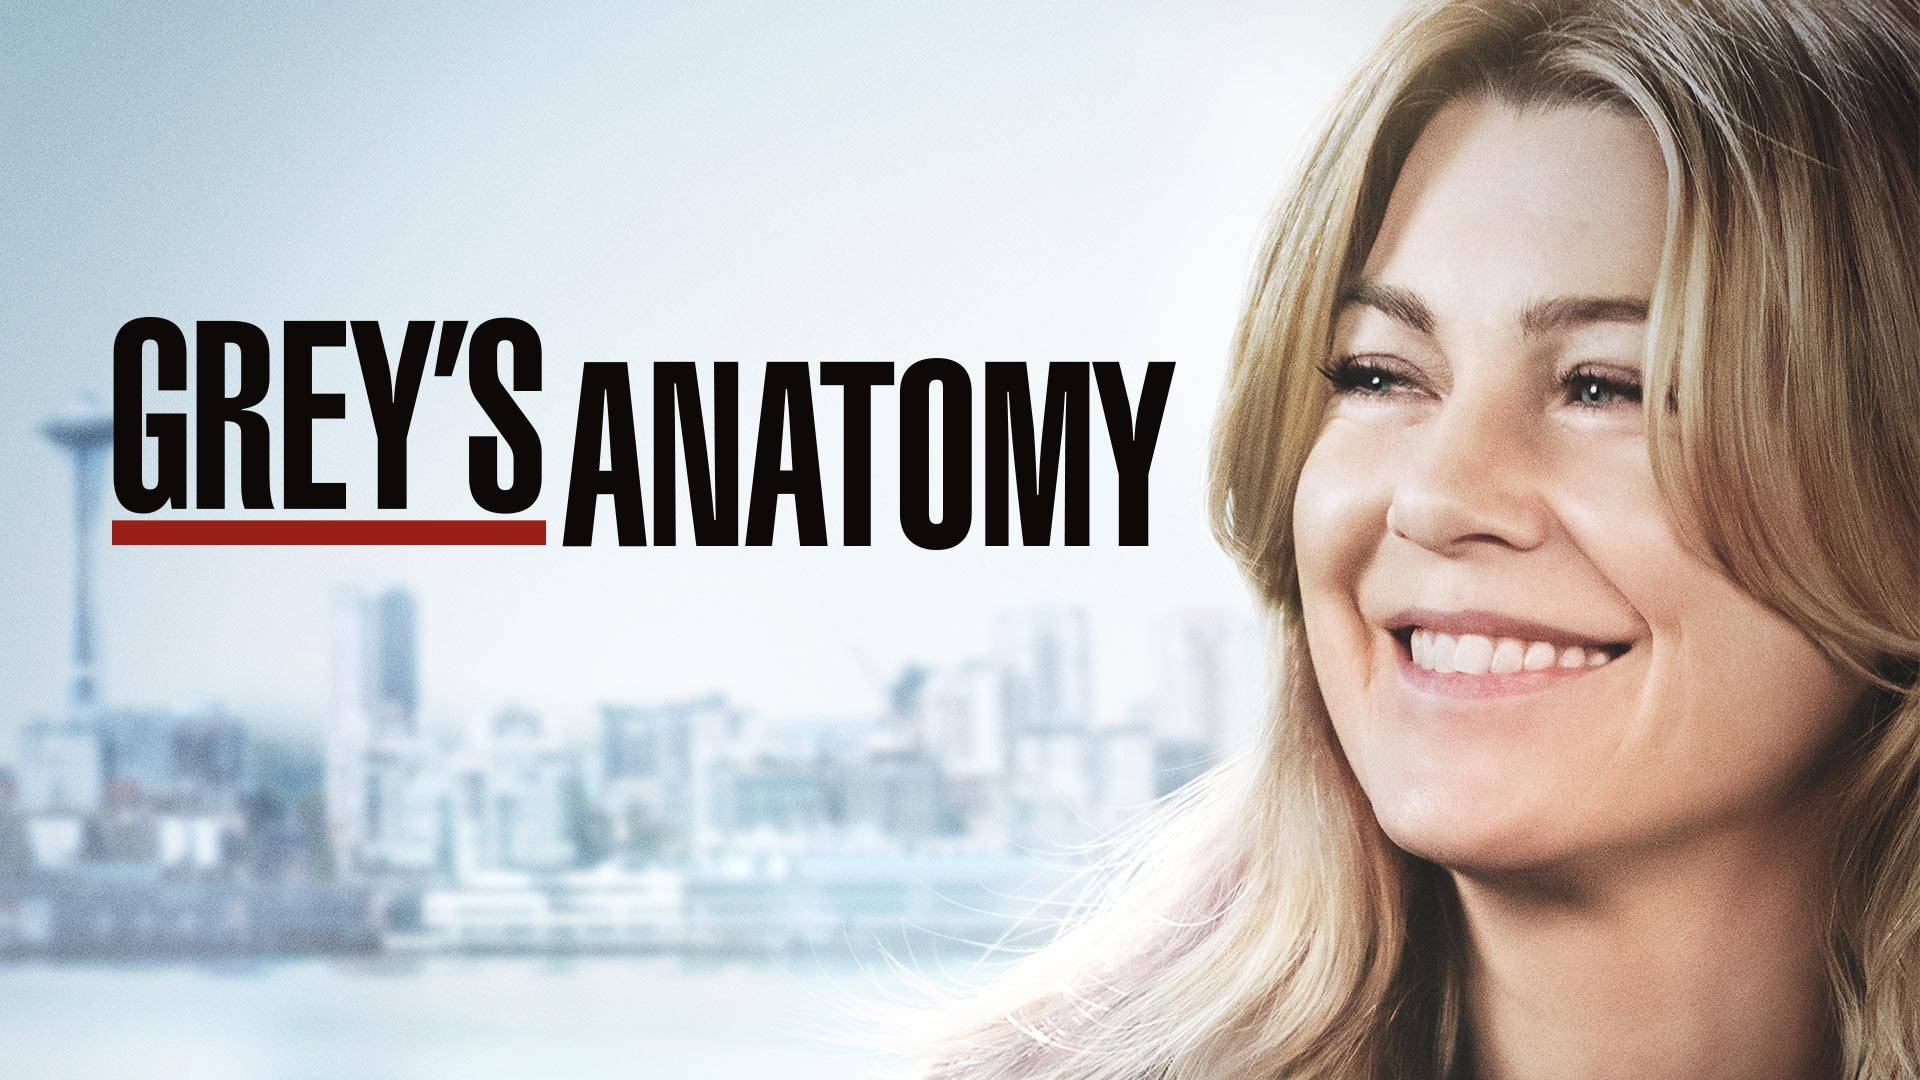 Grey's Anatomy Meredith Grey Poster Background